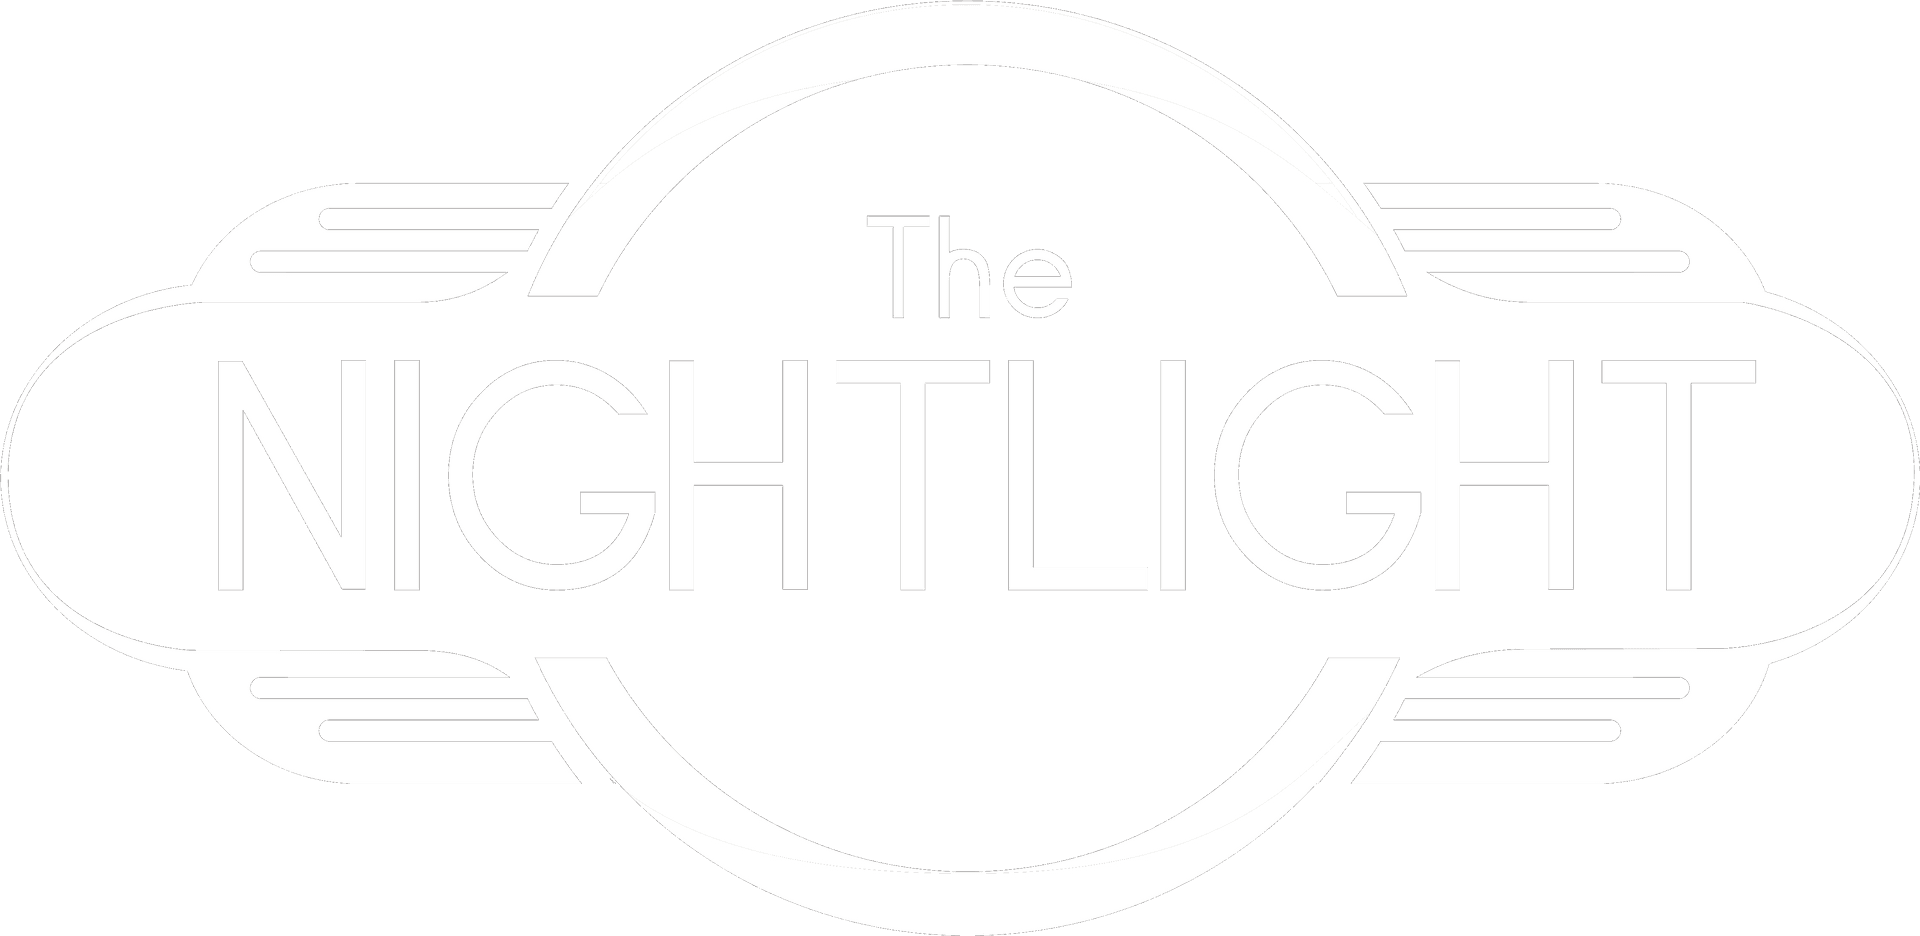 The Nightlight Cinema Logo PNG image